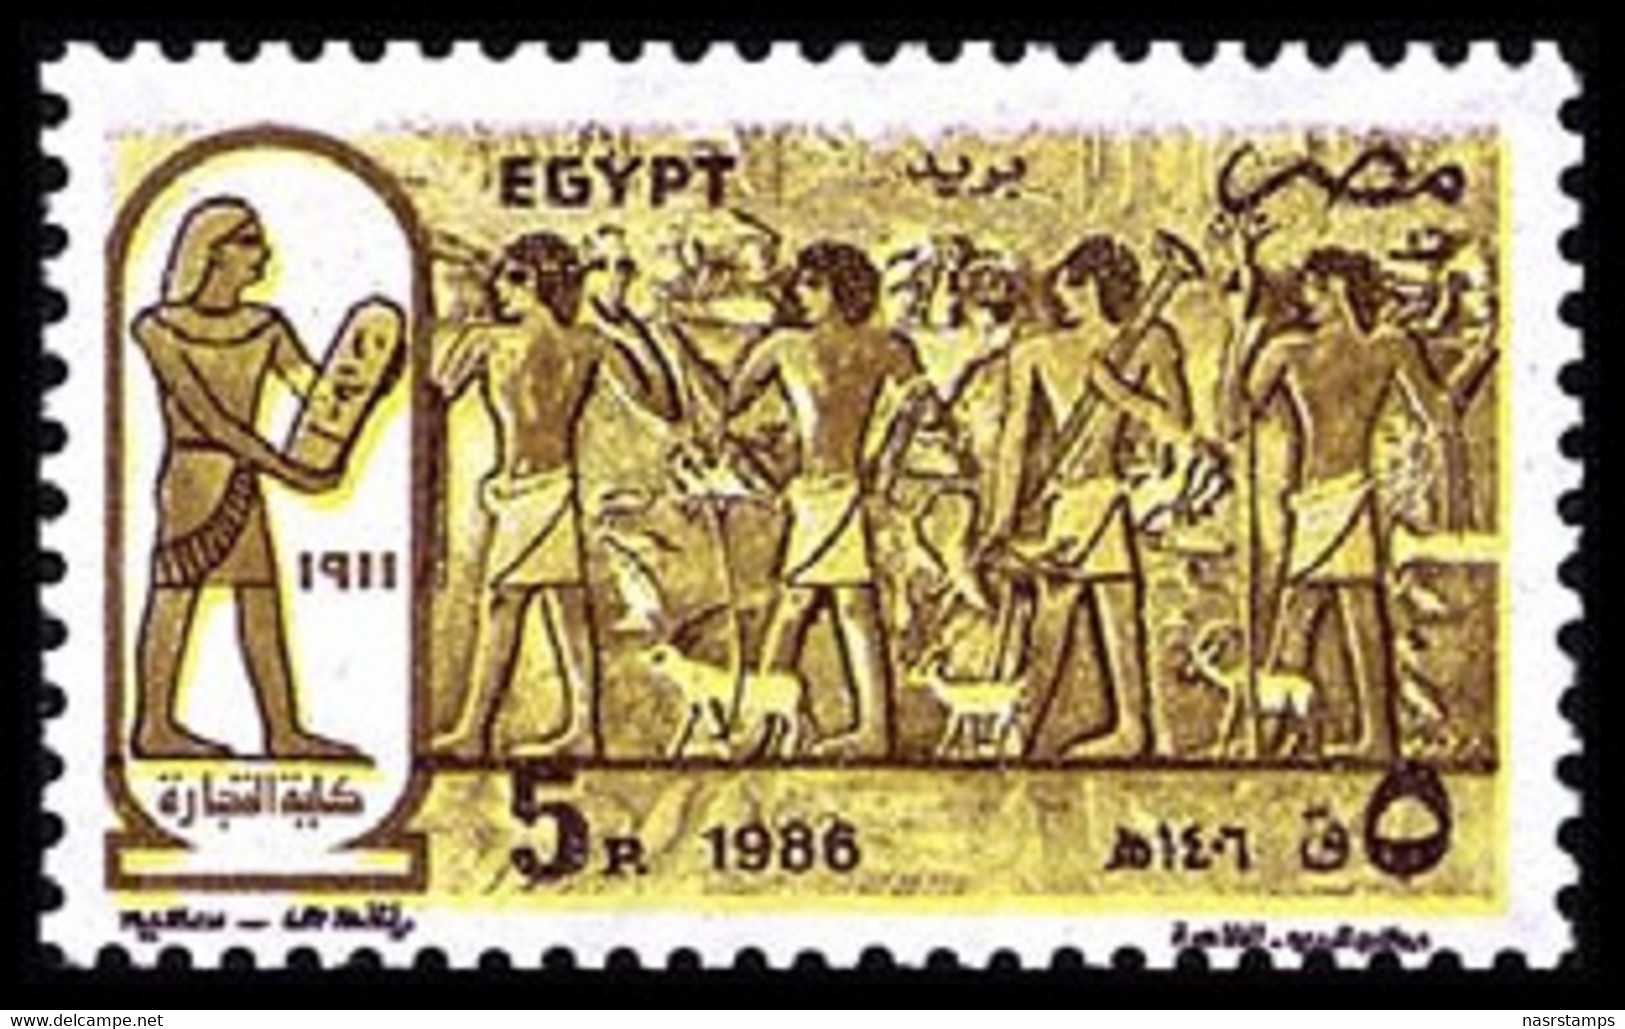 Egypt - 1986 - Egyptology - ( Faculty Of Commerce, Cairo Univ., 75th Anniv. - Btah Hotteb's Tomb At Saqqara ) - Ongebruikt